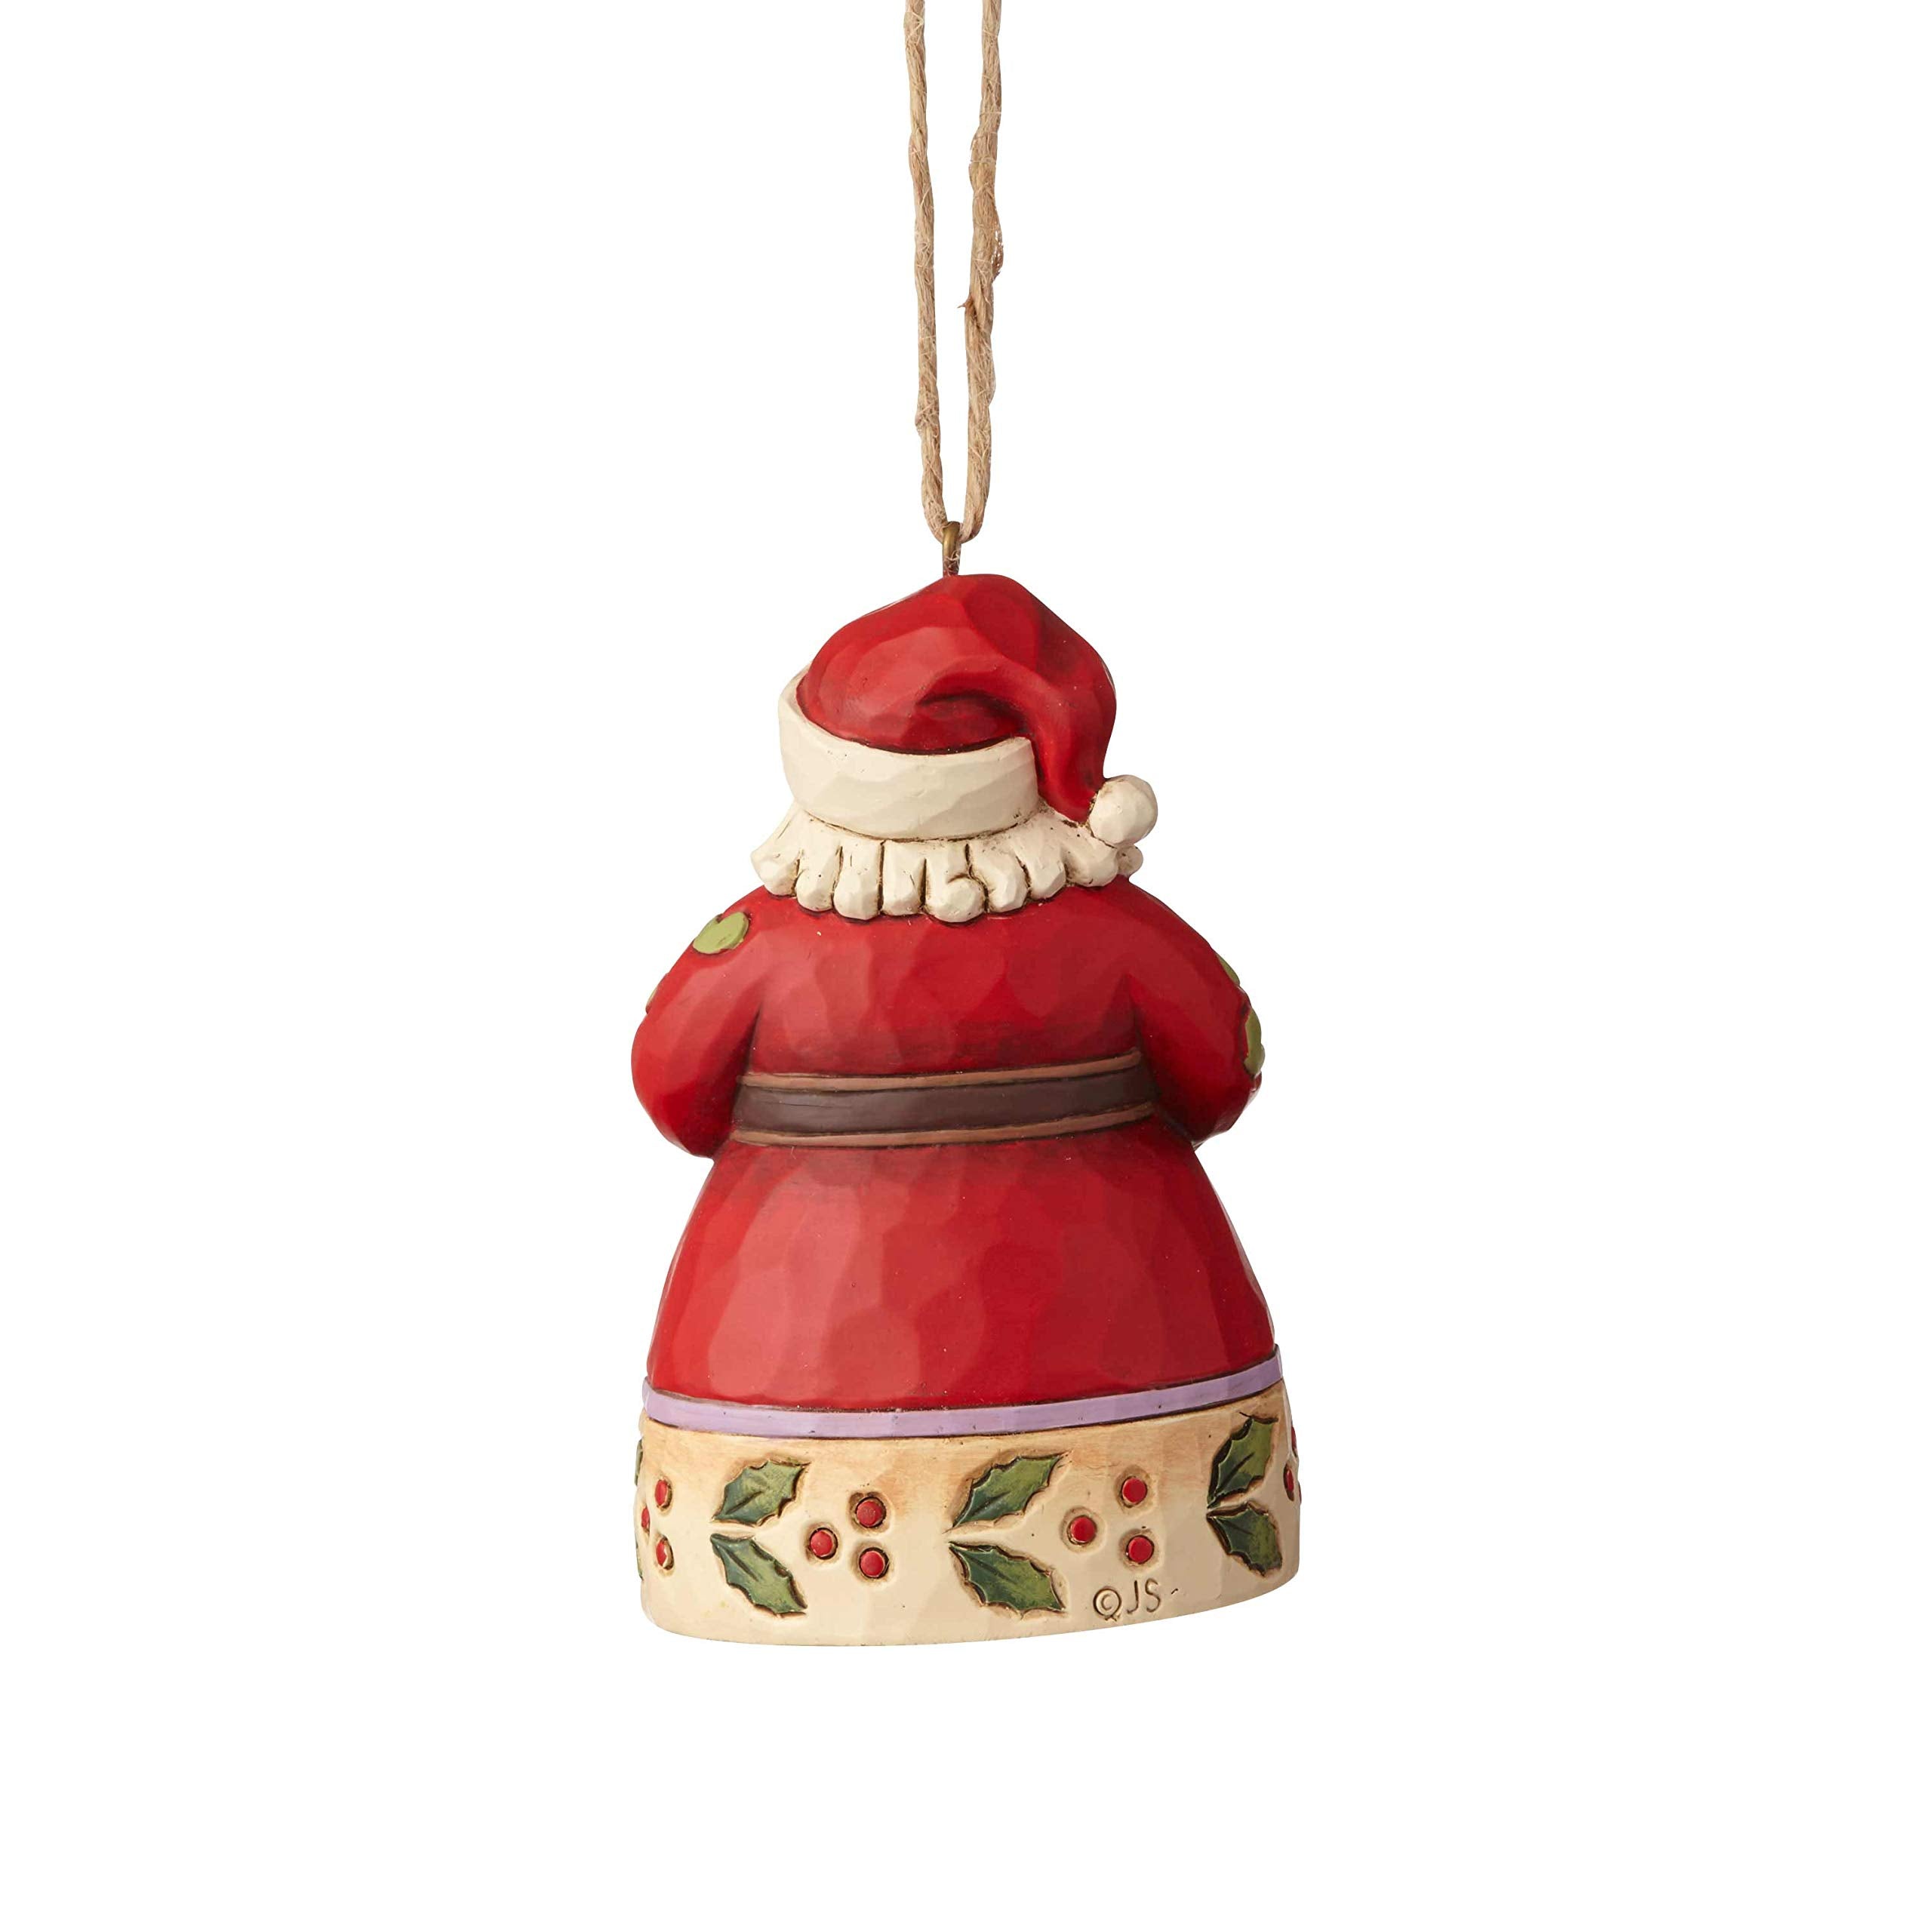 Enesco Jim Shore Heartwood Creek Mini Santa with Teapot Hanging Ornament, 3.75", Multicolor